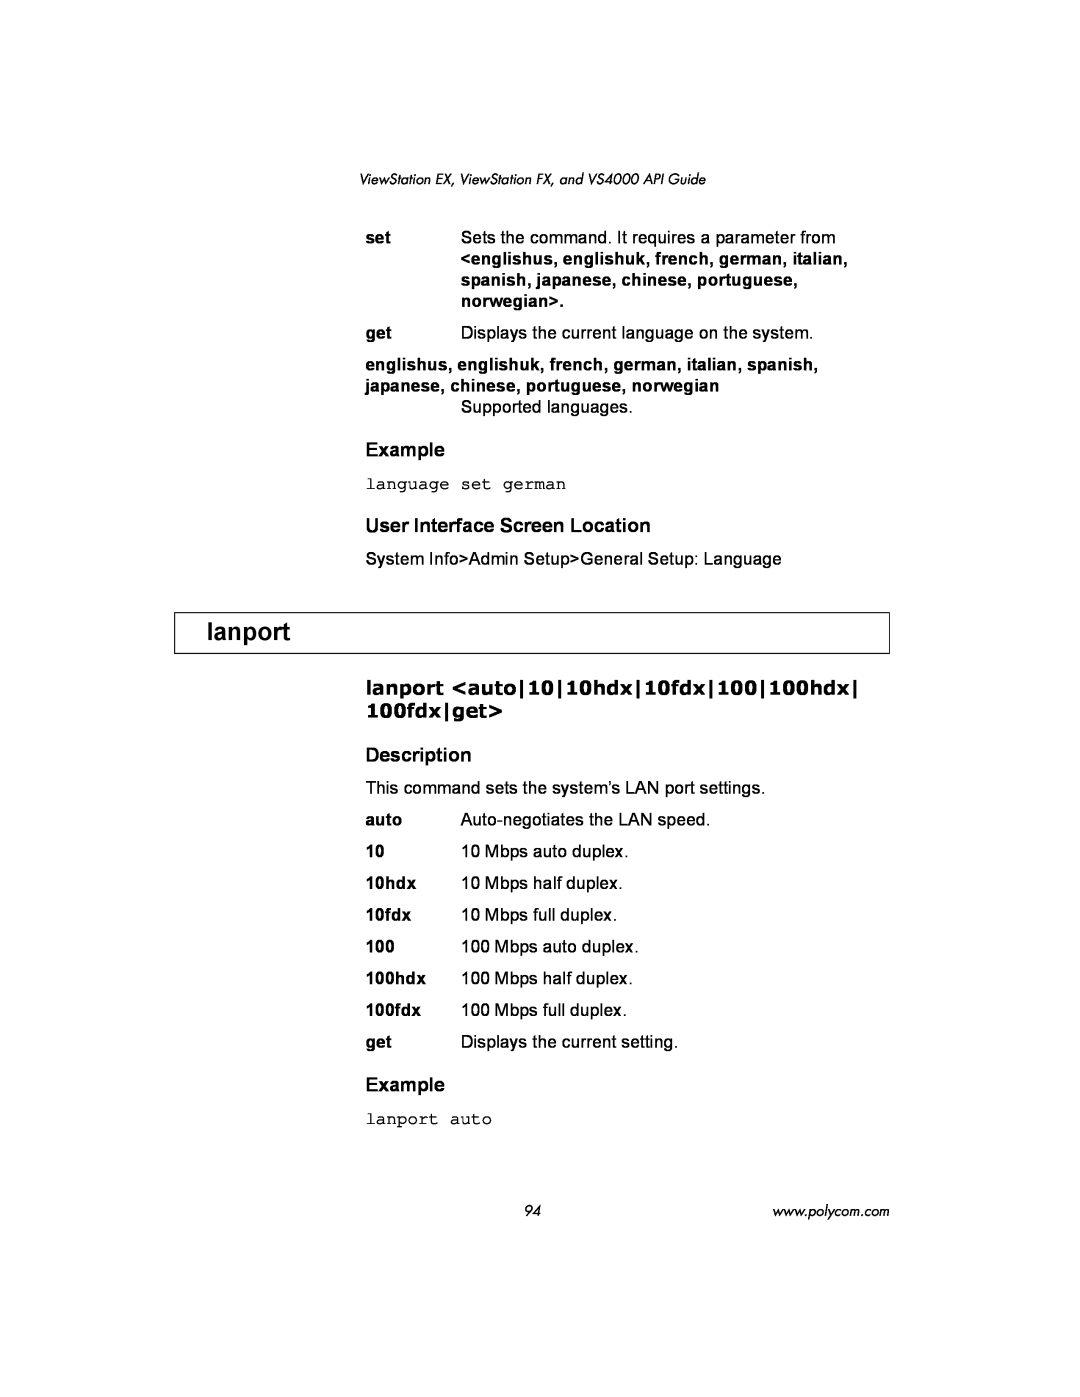 Polycom VIEWSTATION EX manual lanport, Example, User Interface Screen Location, Description, norwegian> 